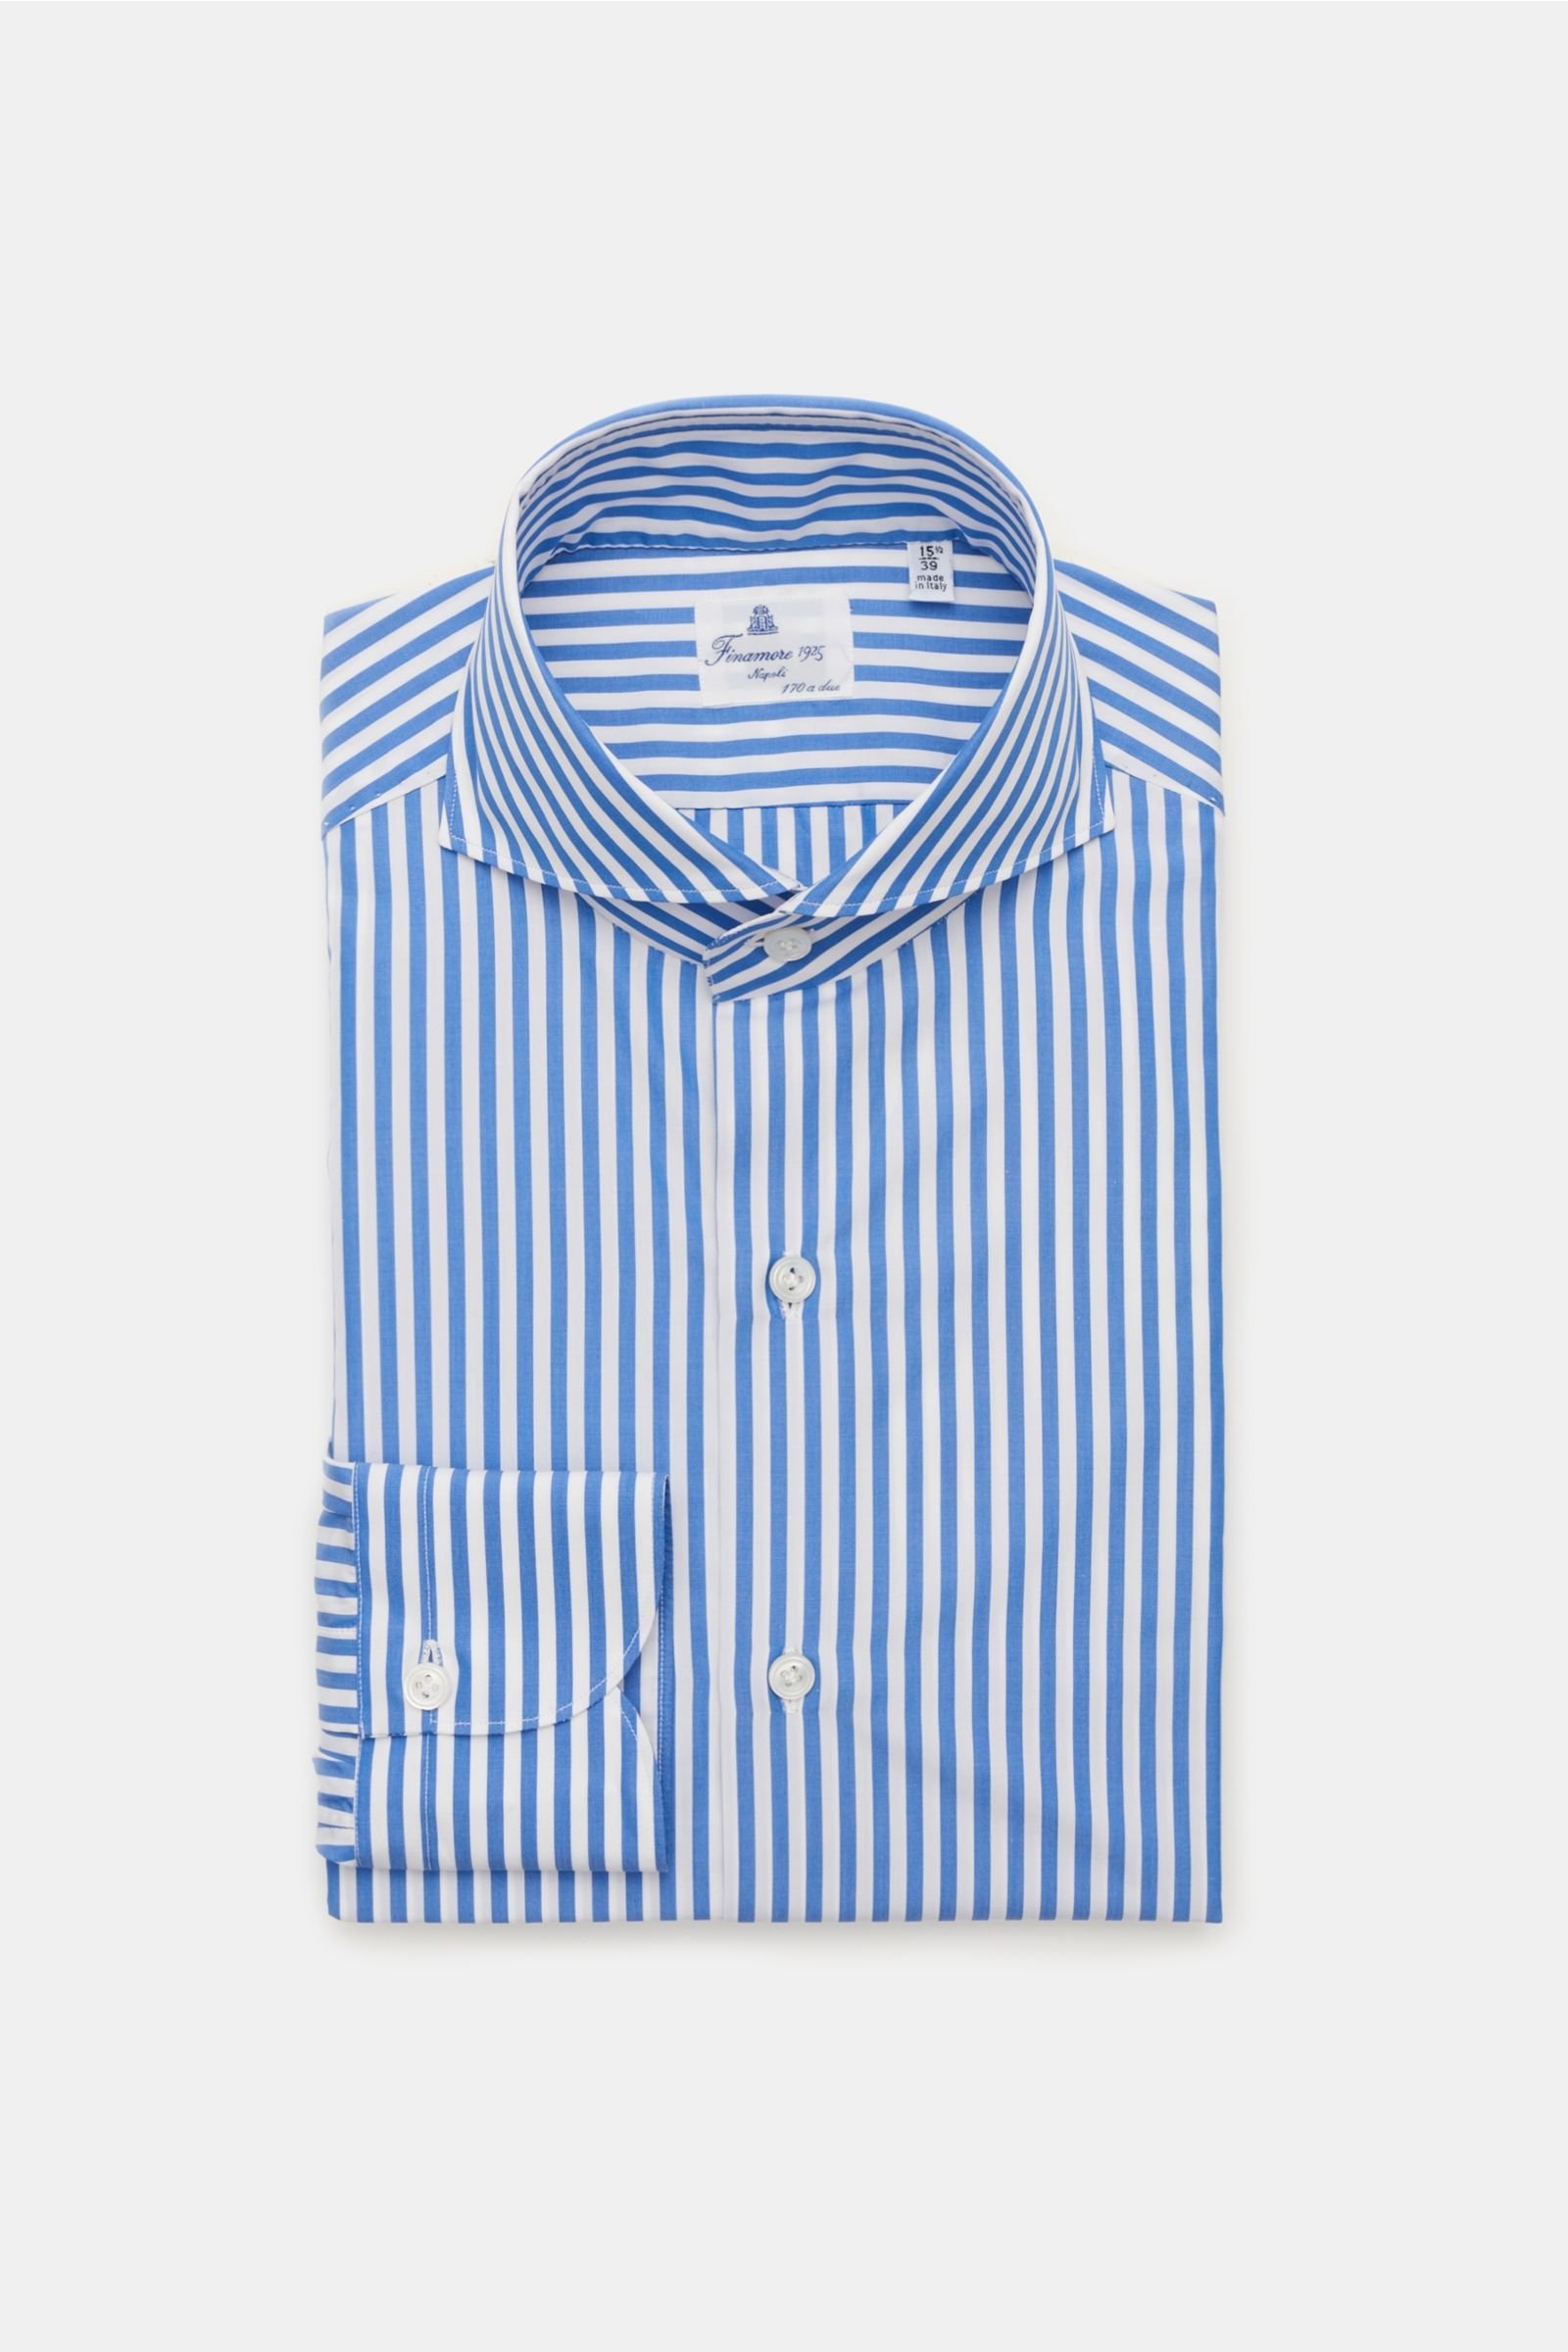 Business shirt 'Sergio Milano' shark collar, smoky blue/white striped